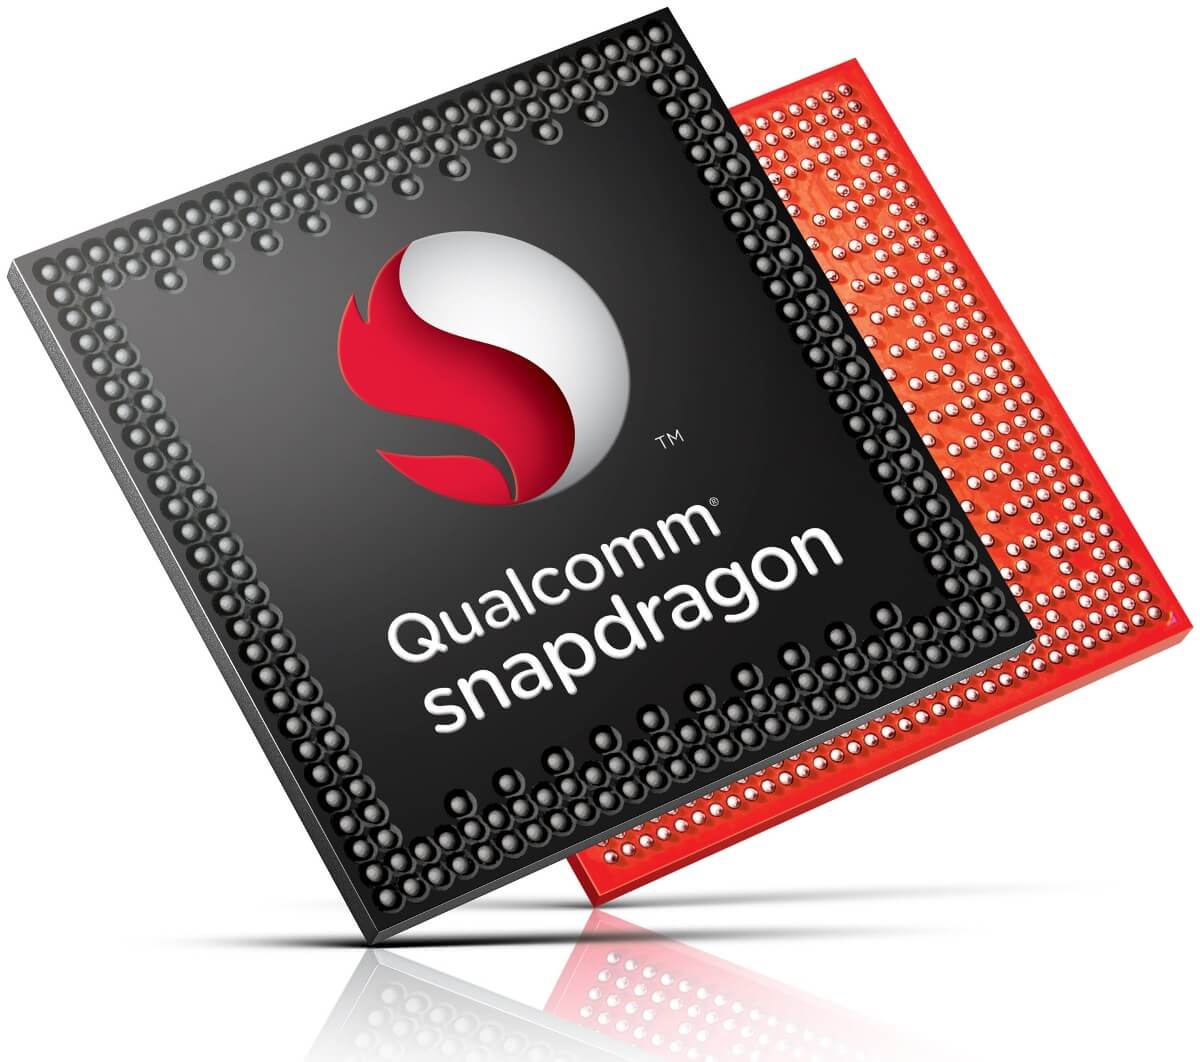 Qualcomm presentó el Snapdragon 835 con Quick Charge 4.0